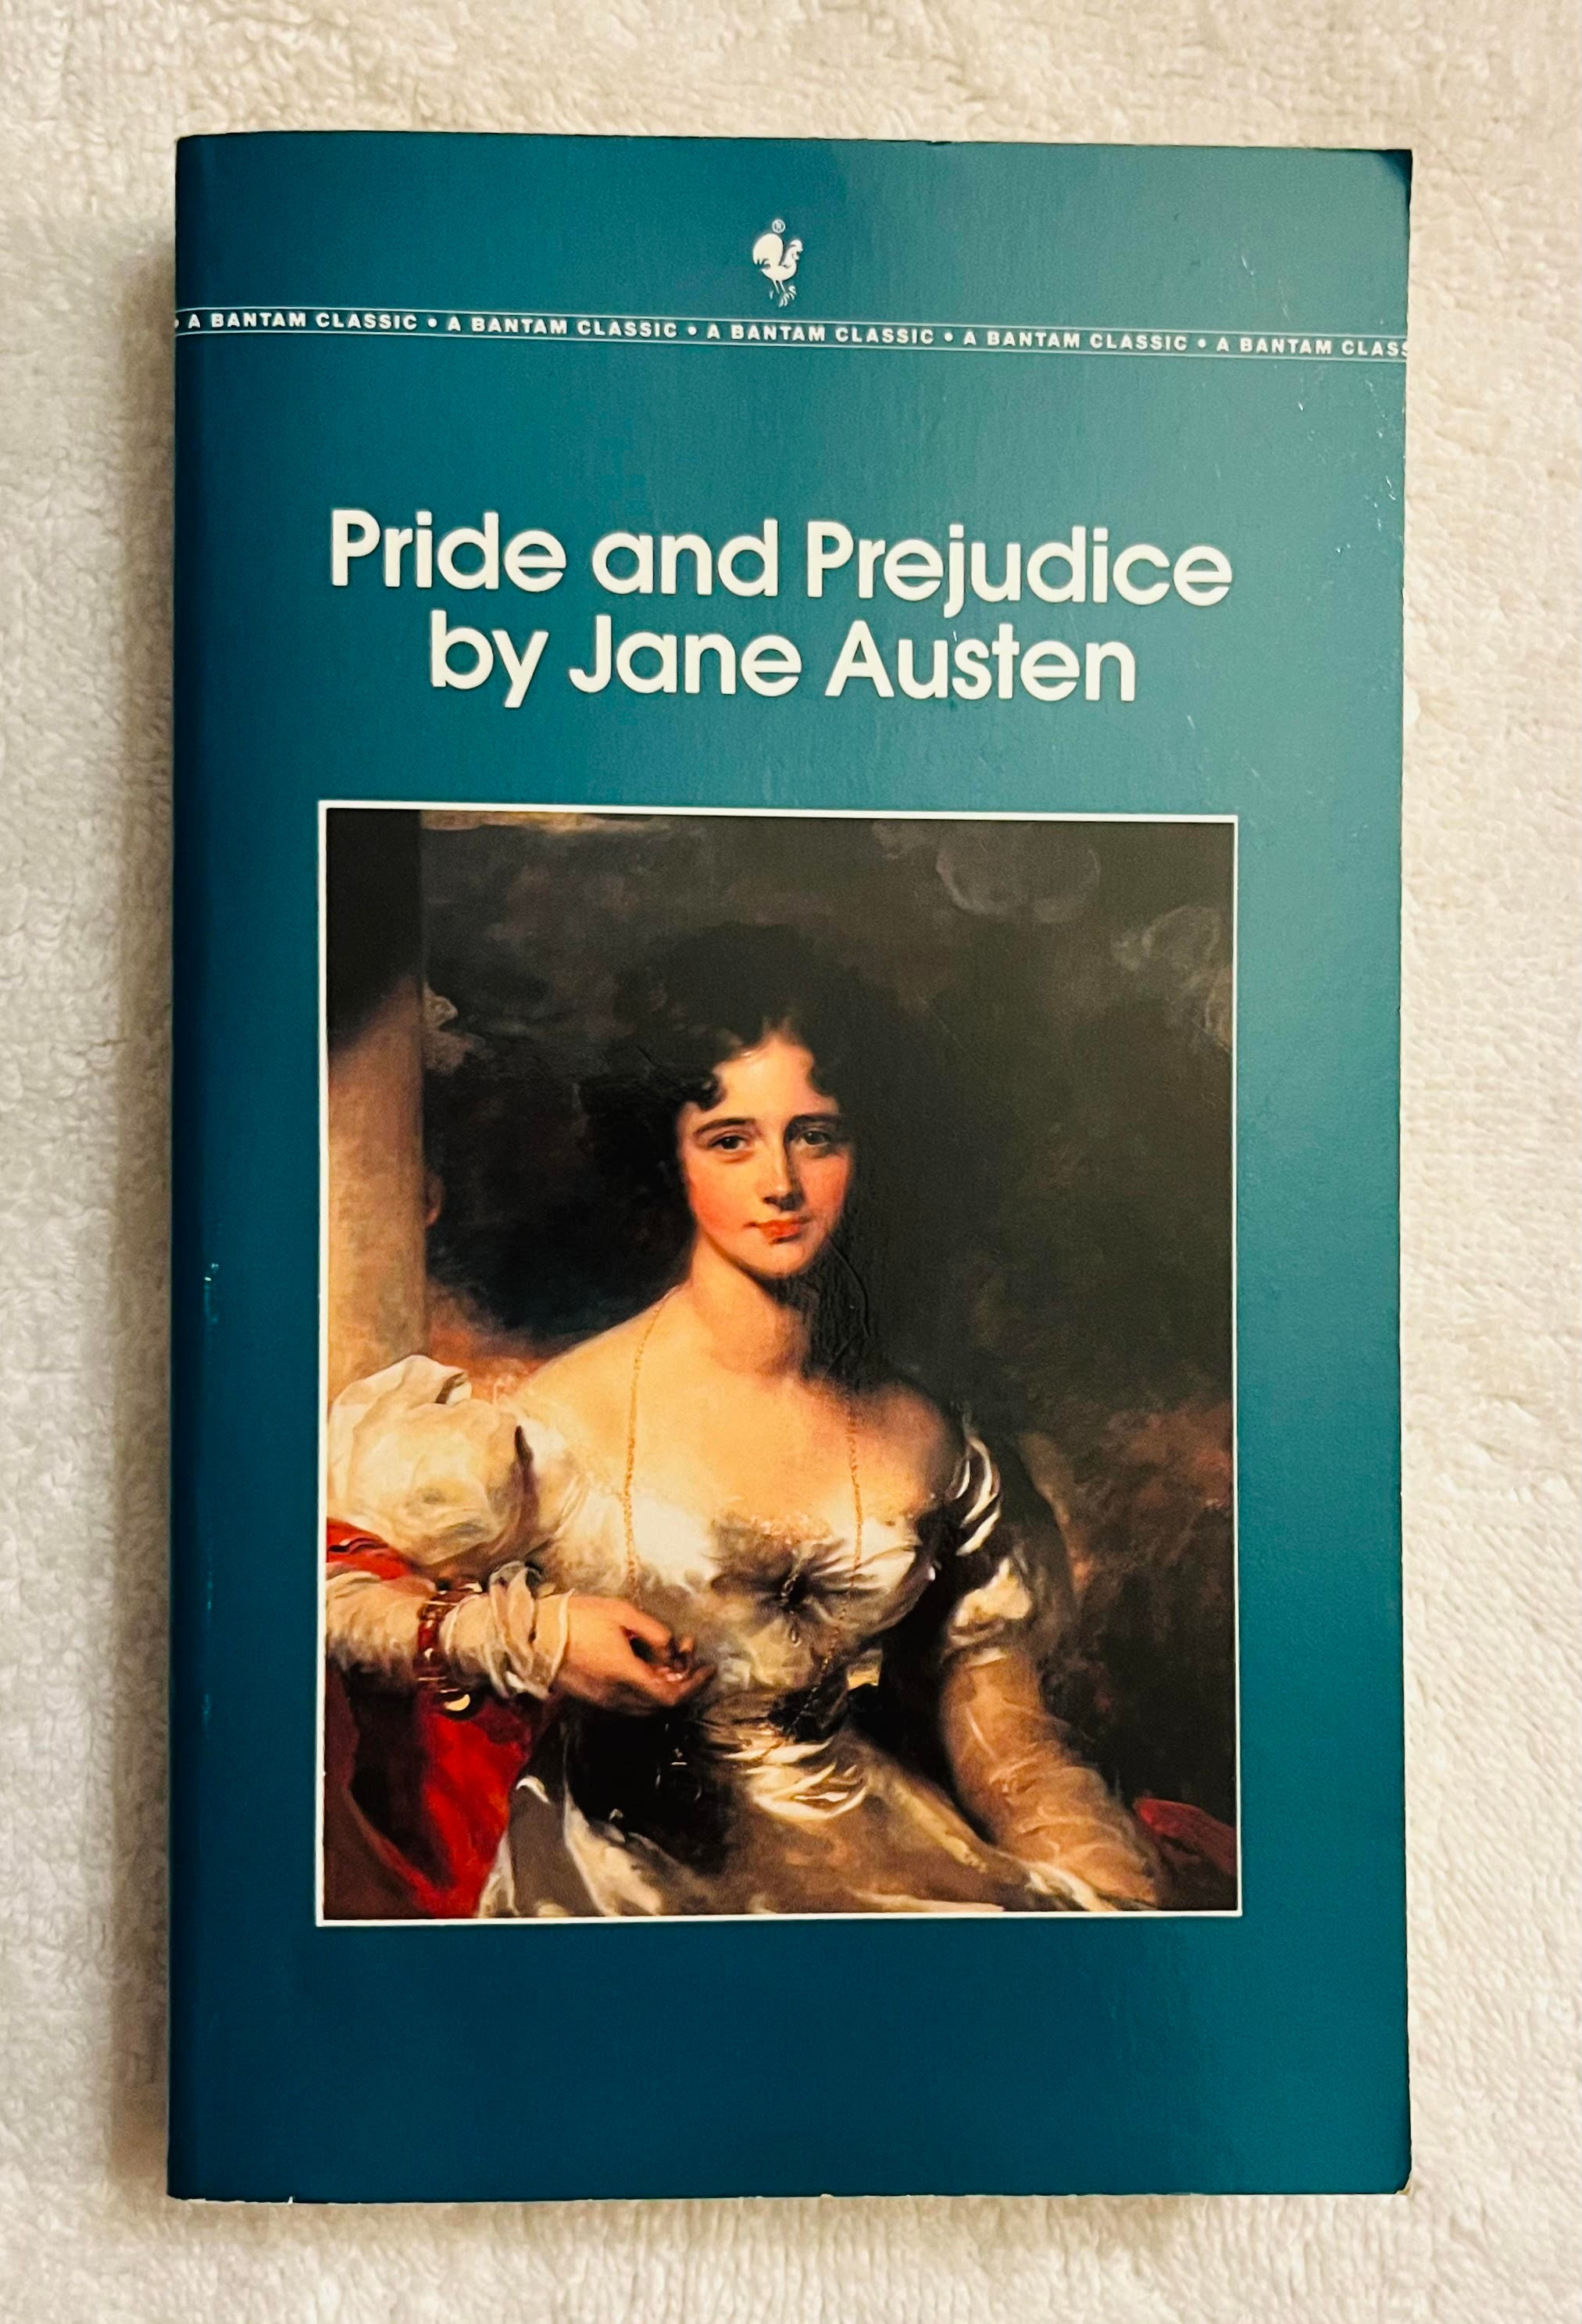 Pride and Prejudice by Jane Austen [ILLUSTRATED HARDCOVER / 1984]